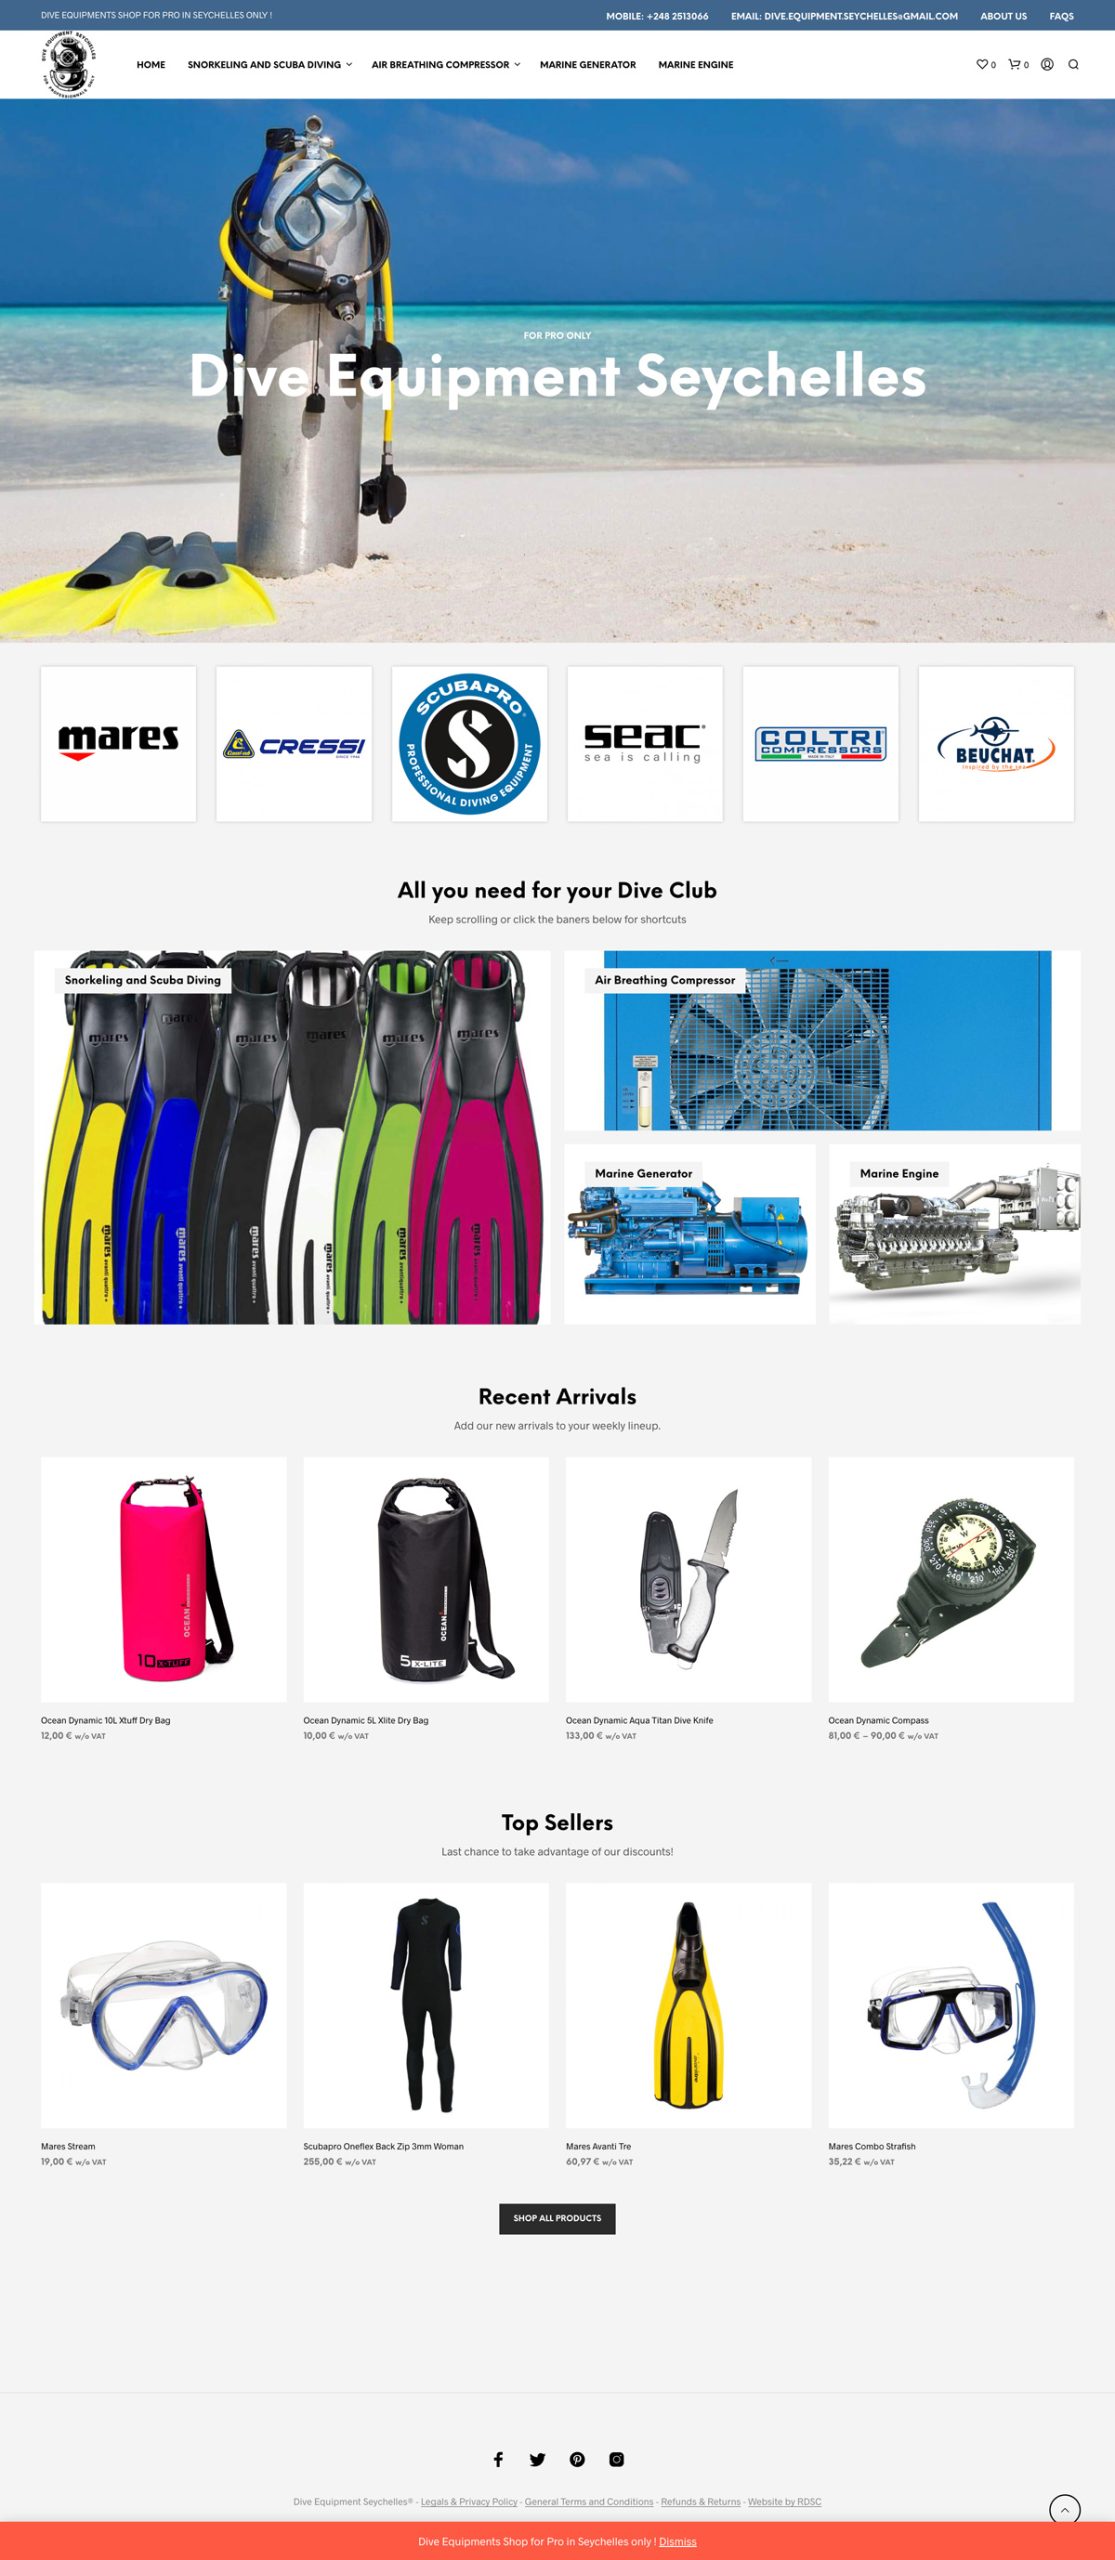 rdsc dive equipment seychelles website screenshot scaled